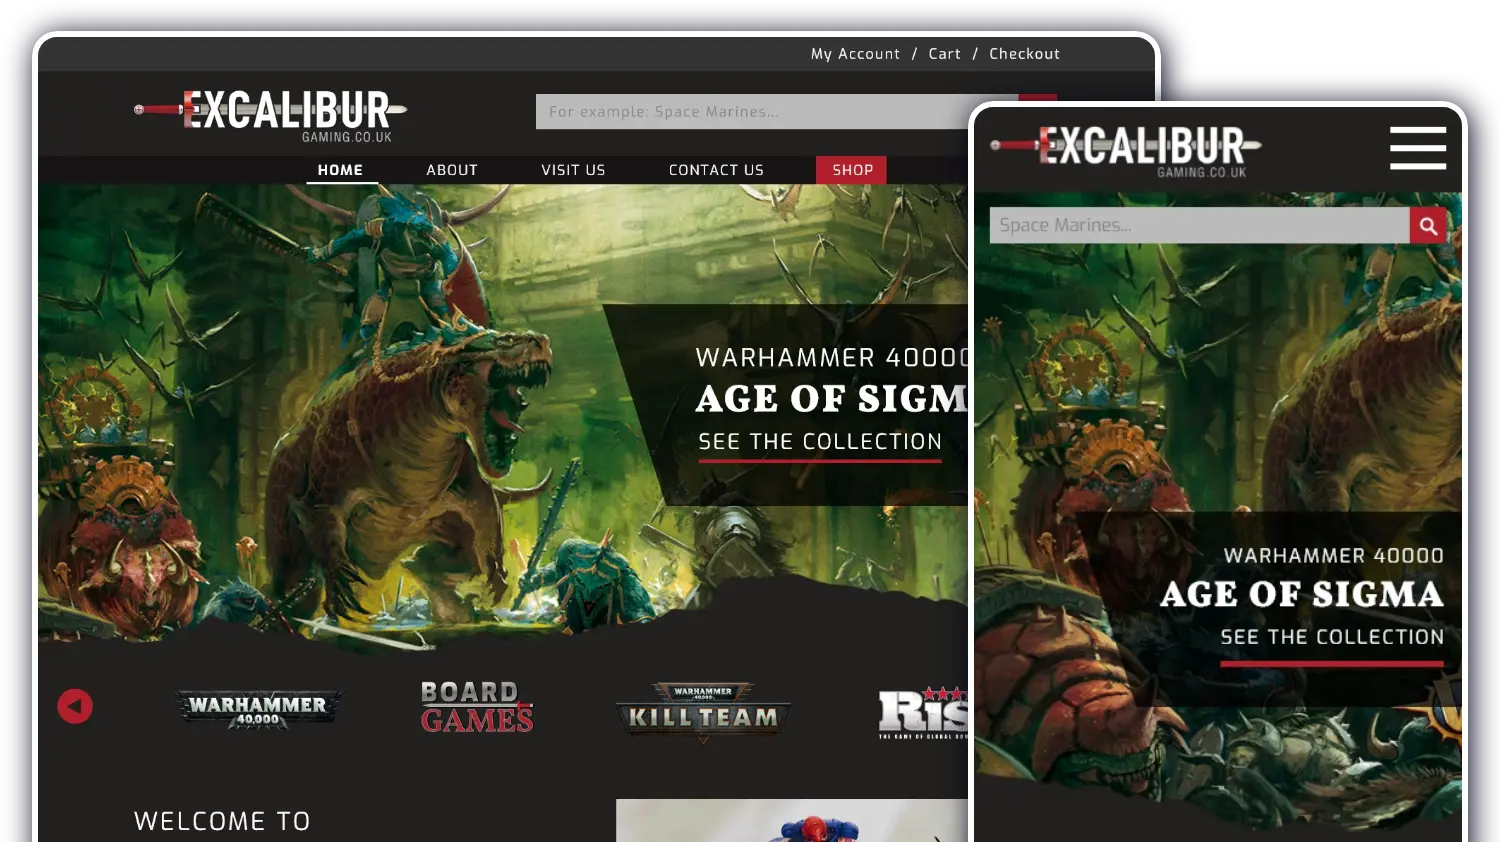 Excalibur Gaming - Website by Blaze Concepts